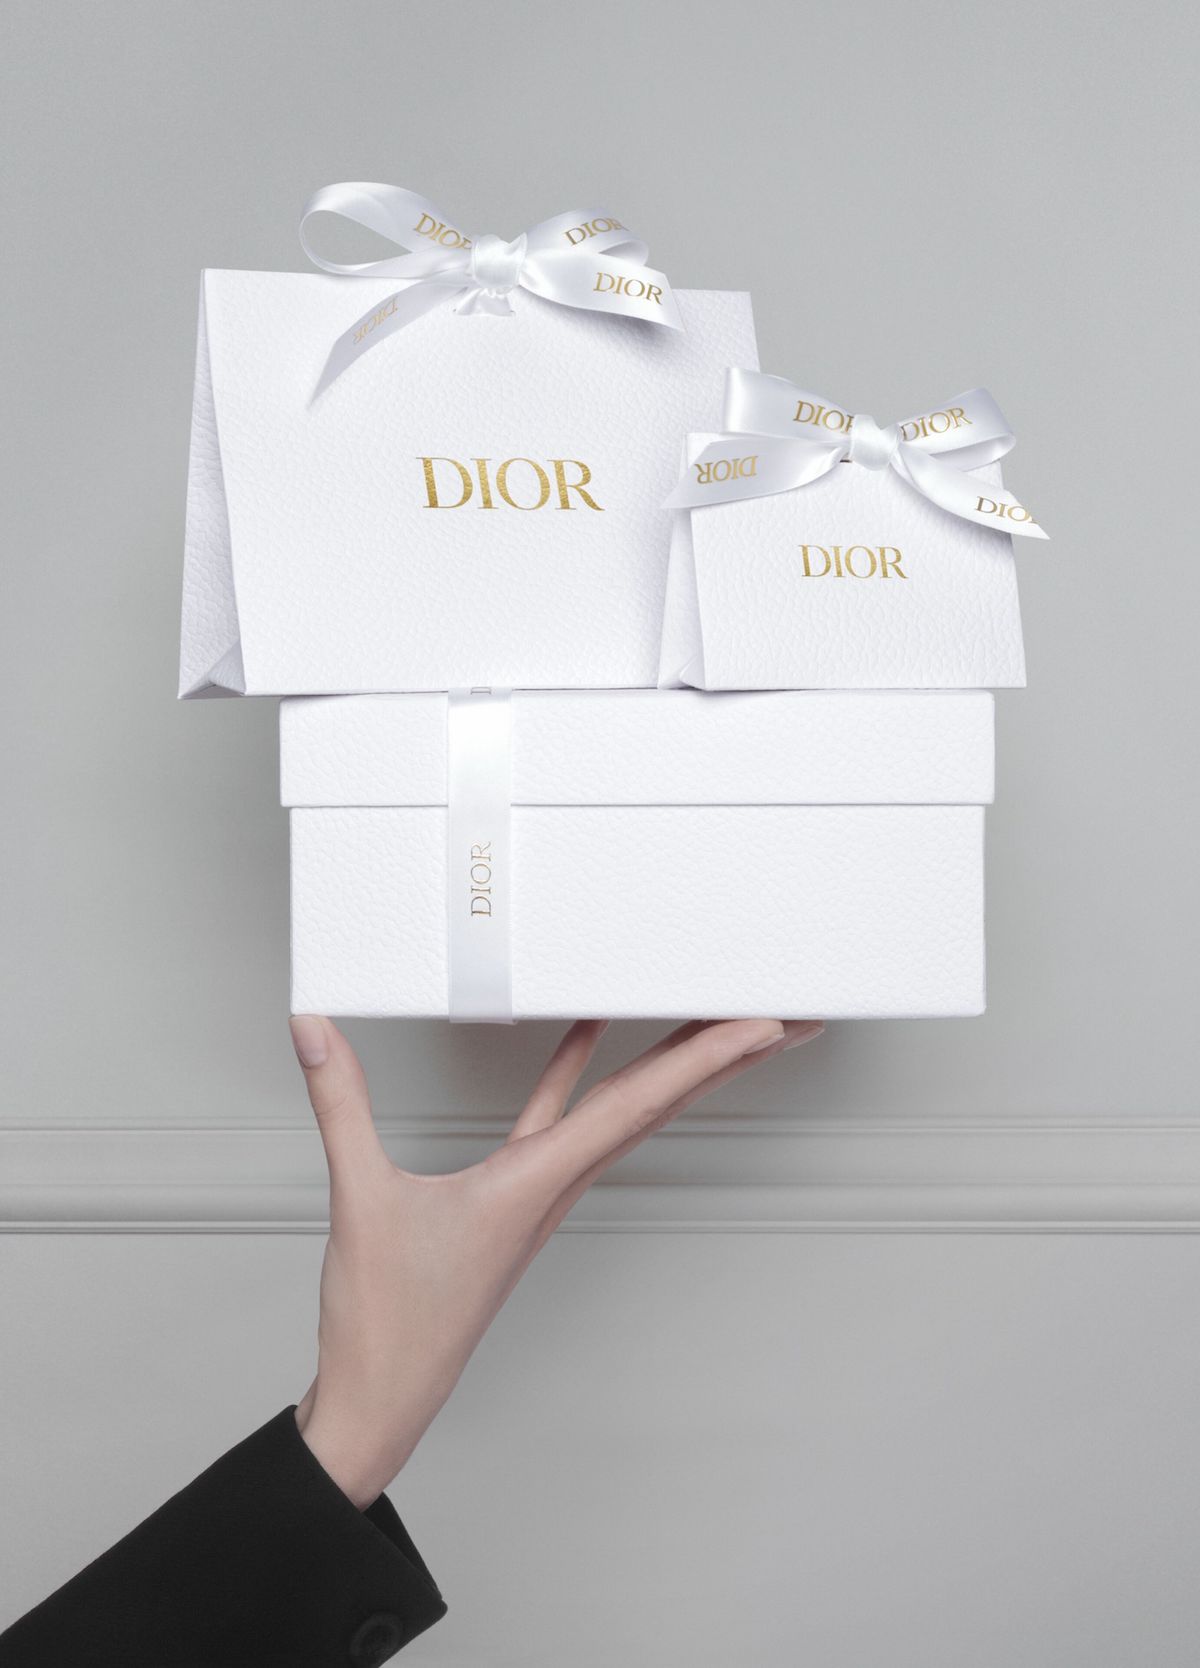 Dior Makeup  Cosmetics  Shop Online  DIOR AU  Dior Online Boutique  Australia